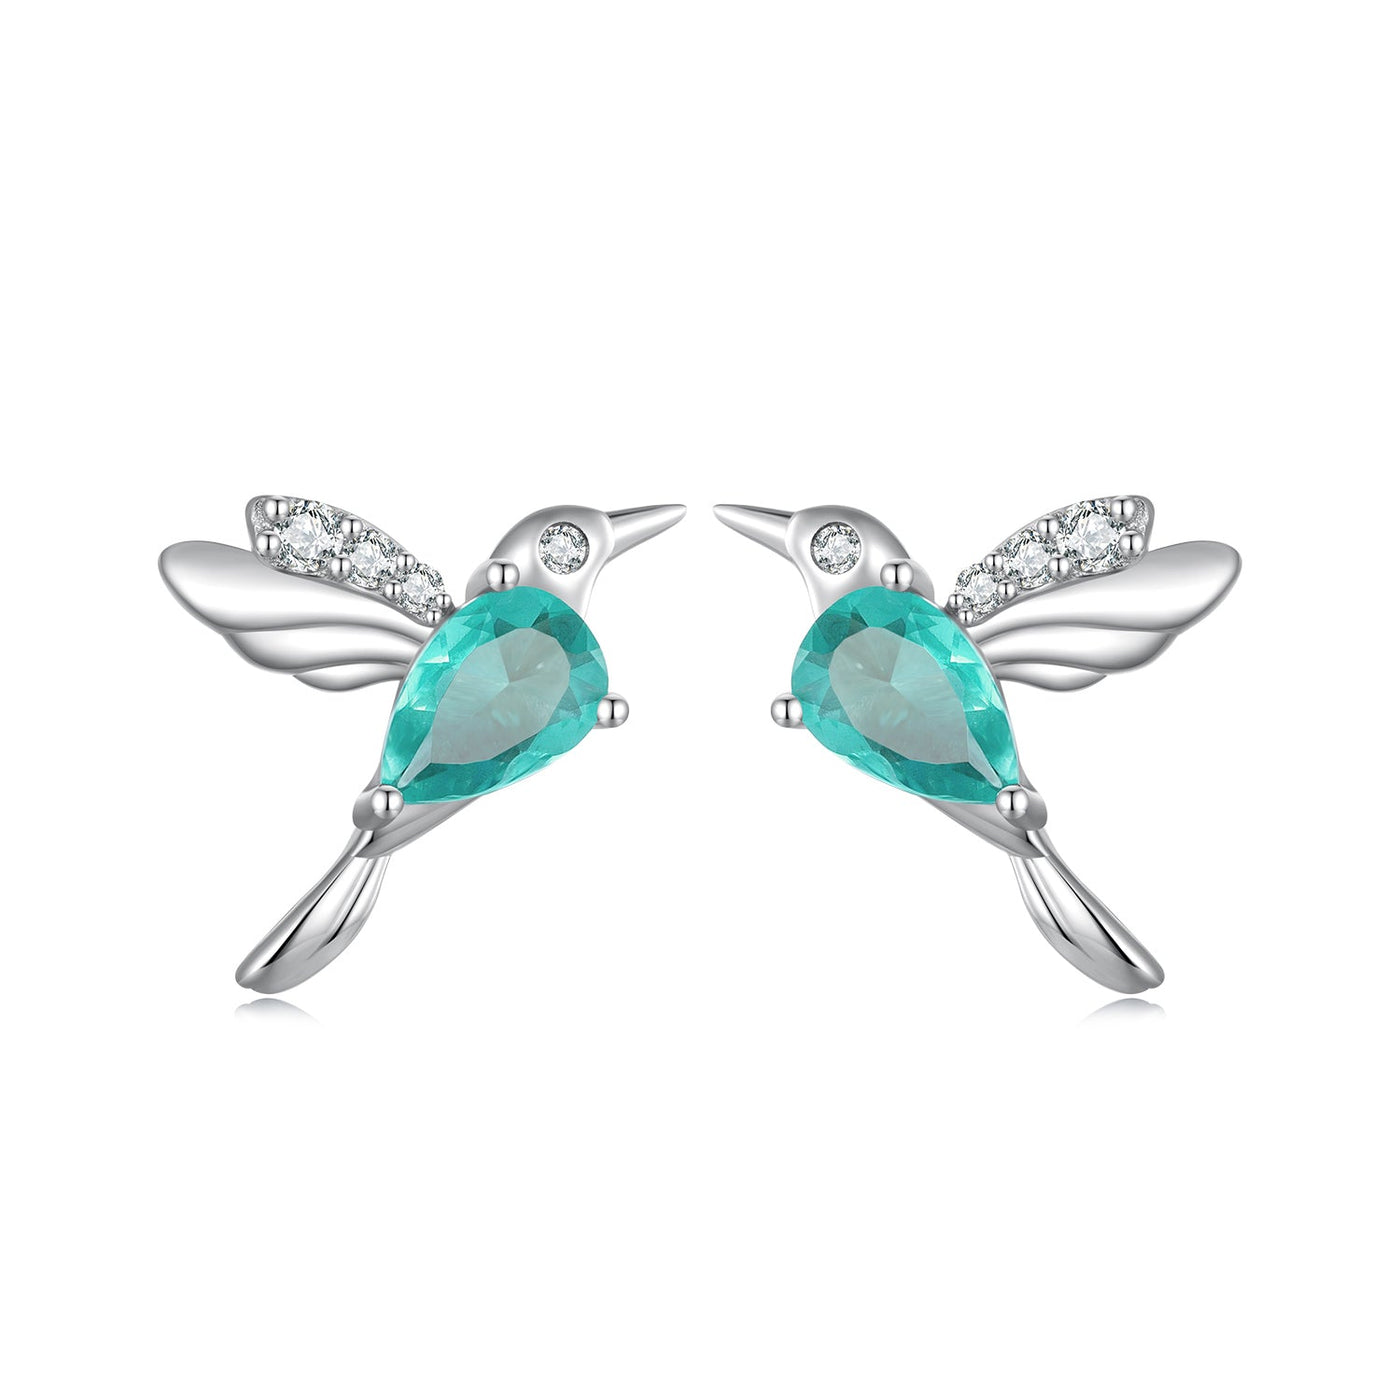 Mint Hummingbird Earrings - The Silver Goose SA